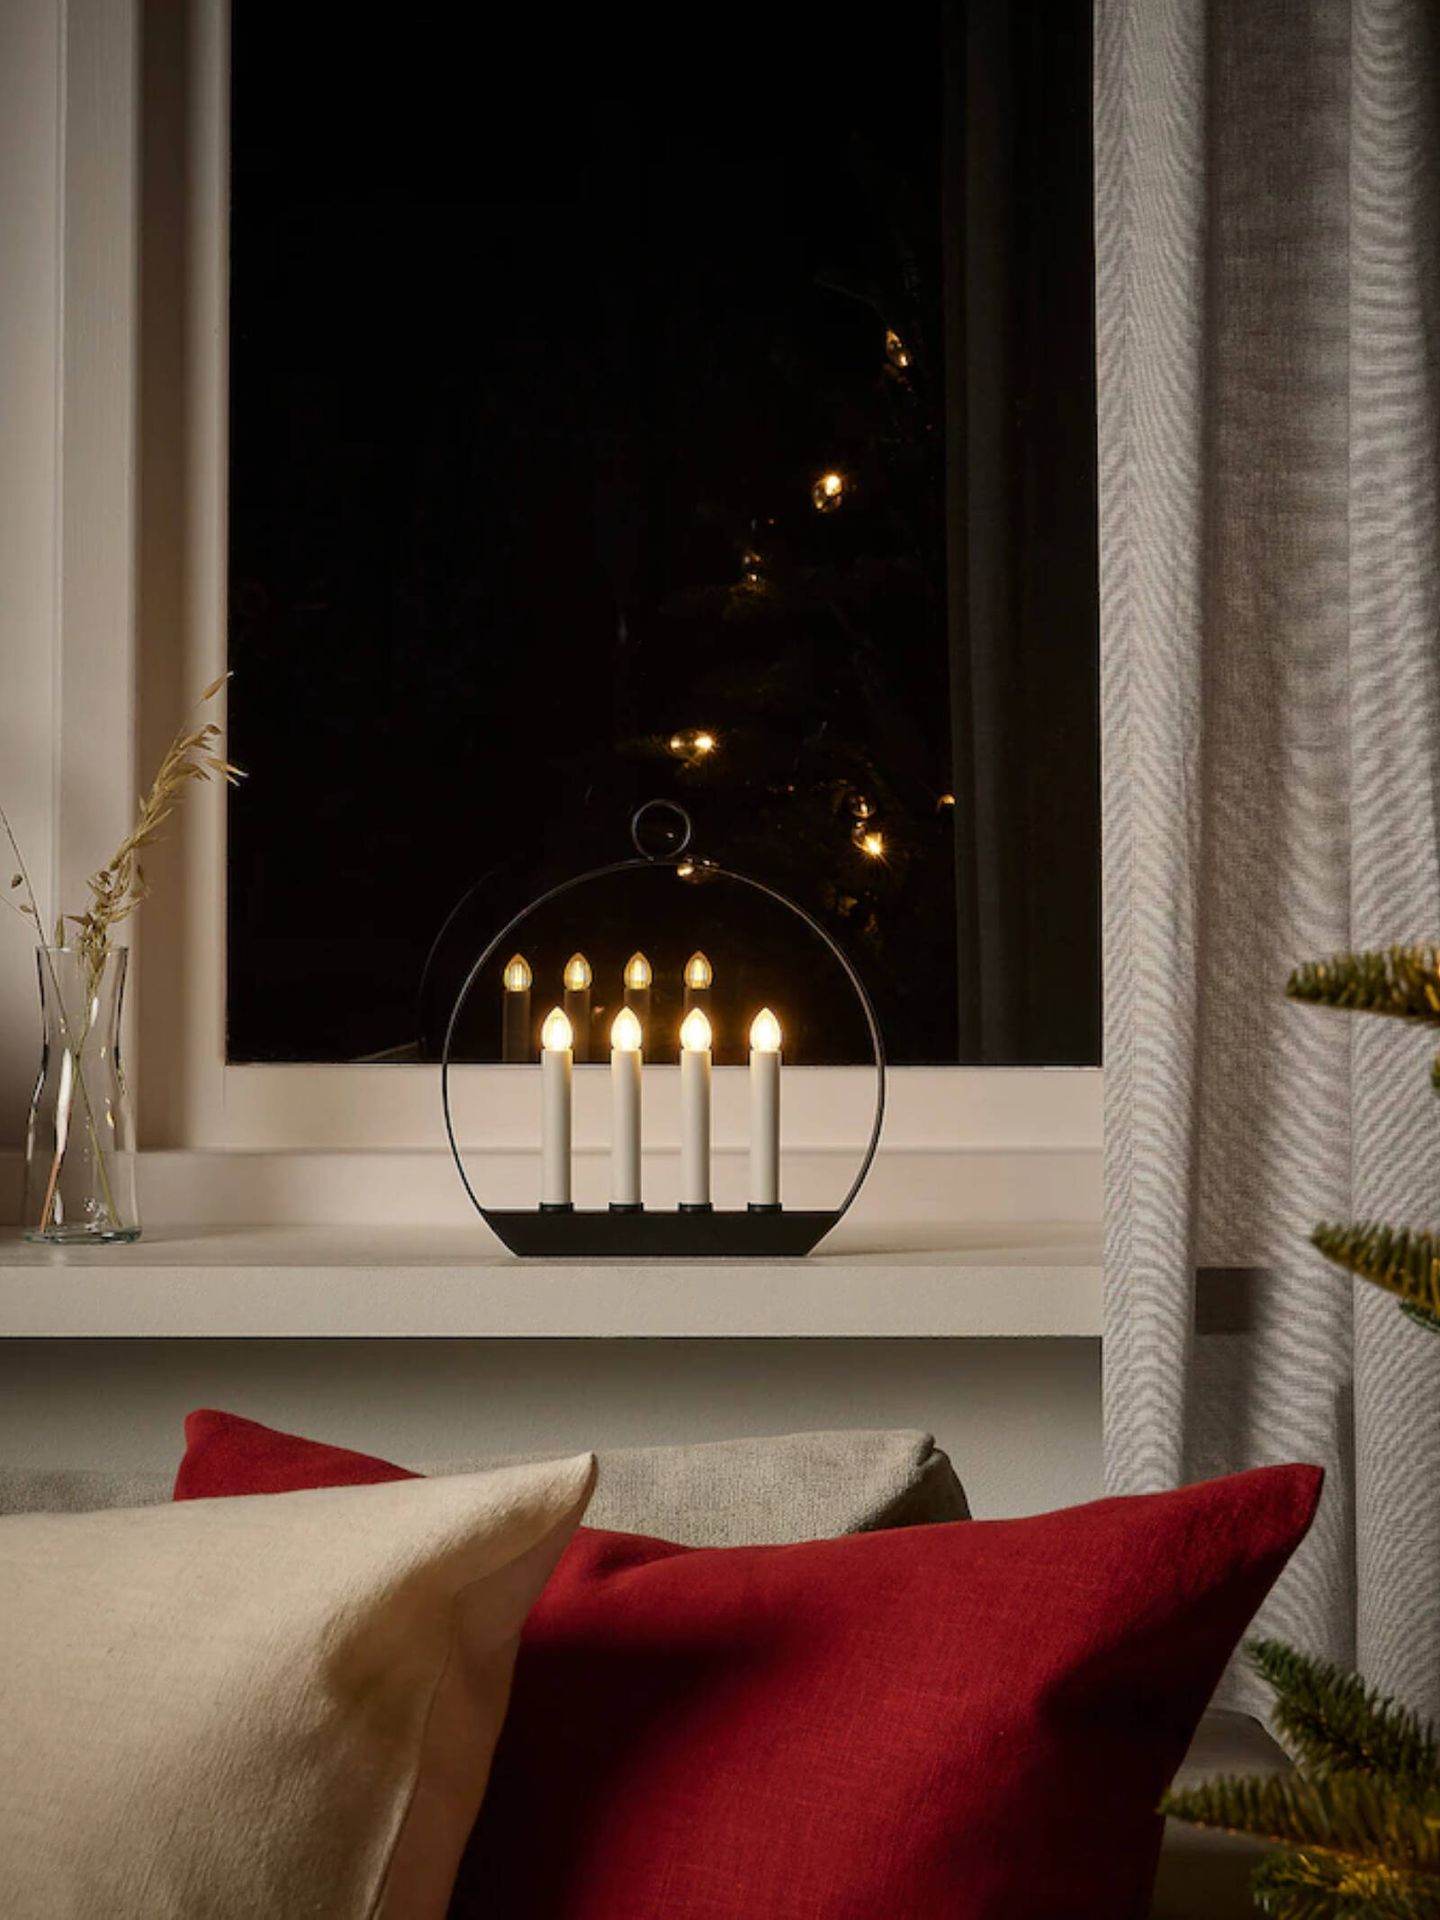 Novedades en lámparas para iluminar tu casa. (Cortesía/Ikea)